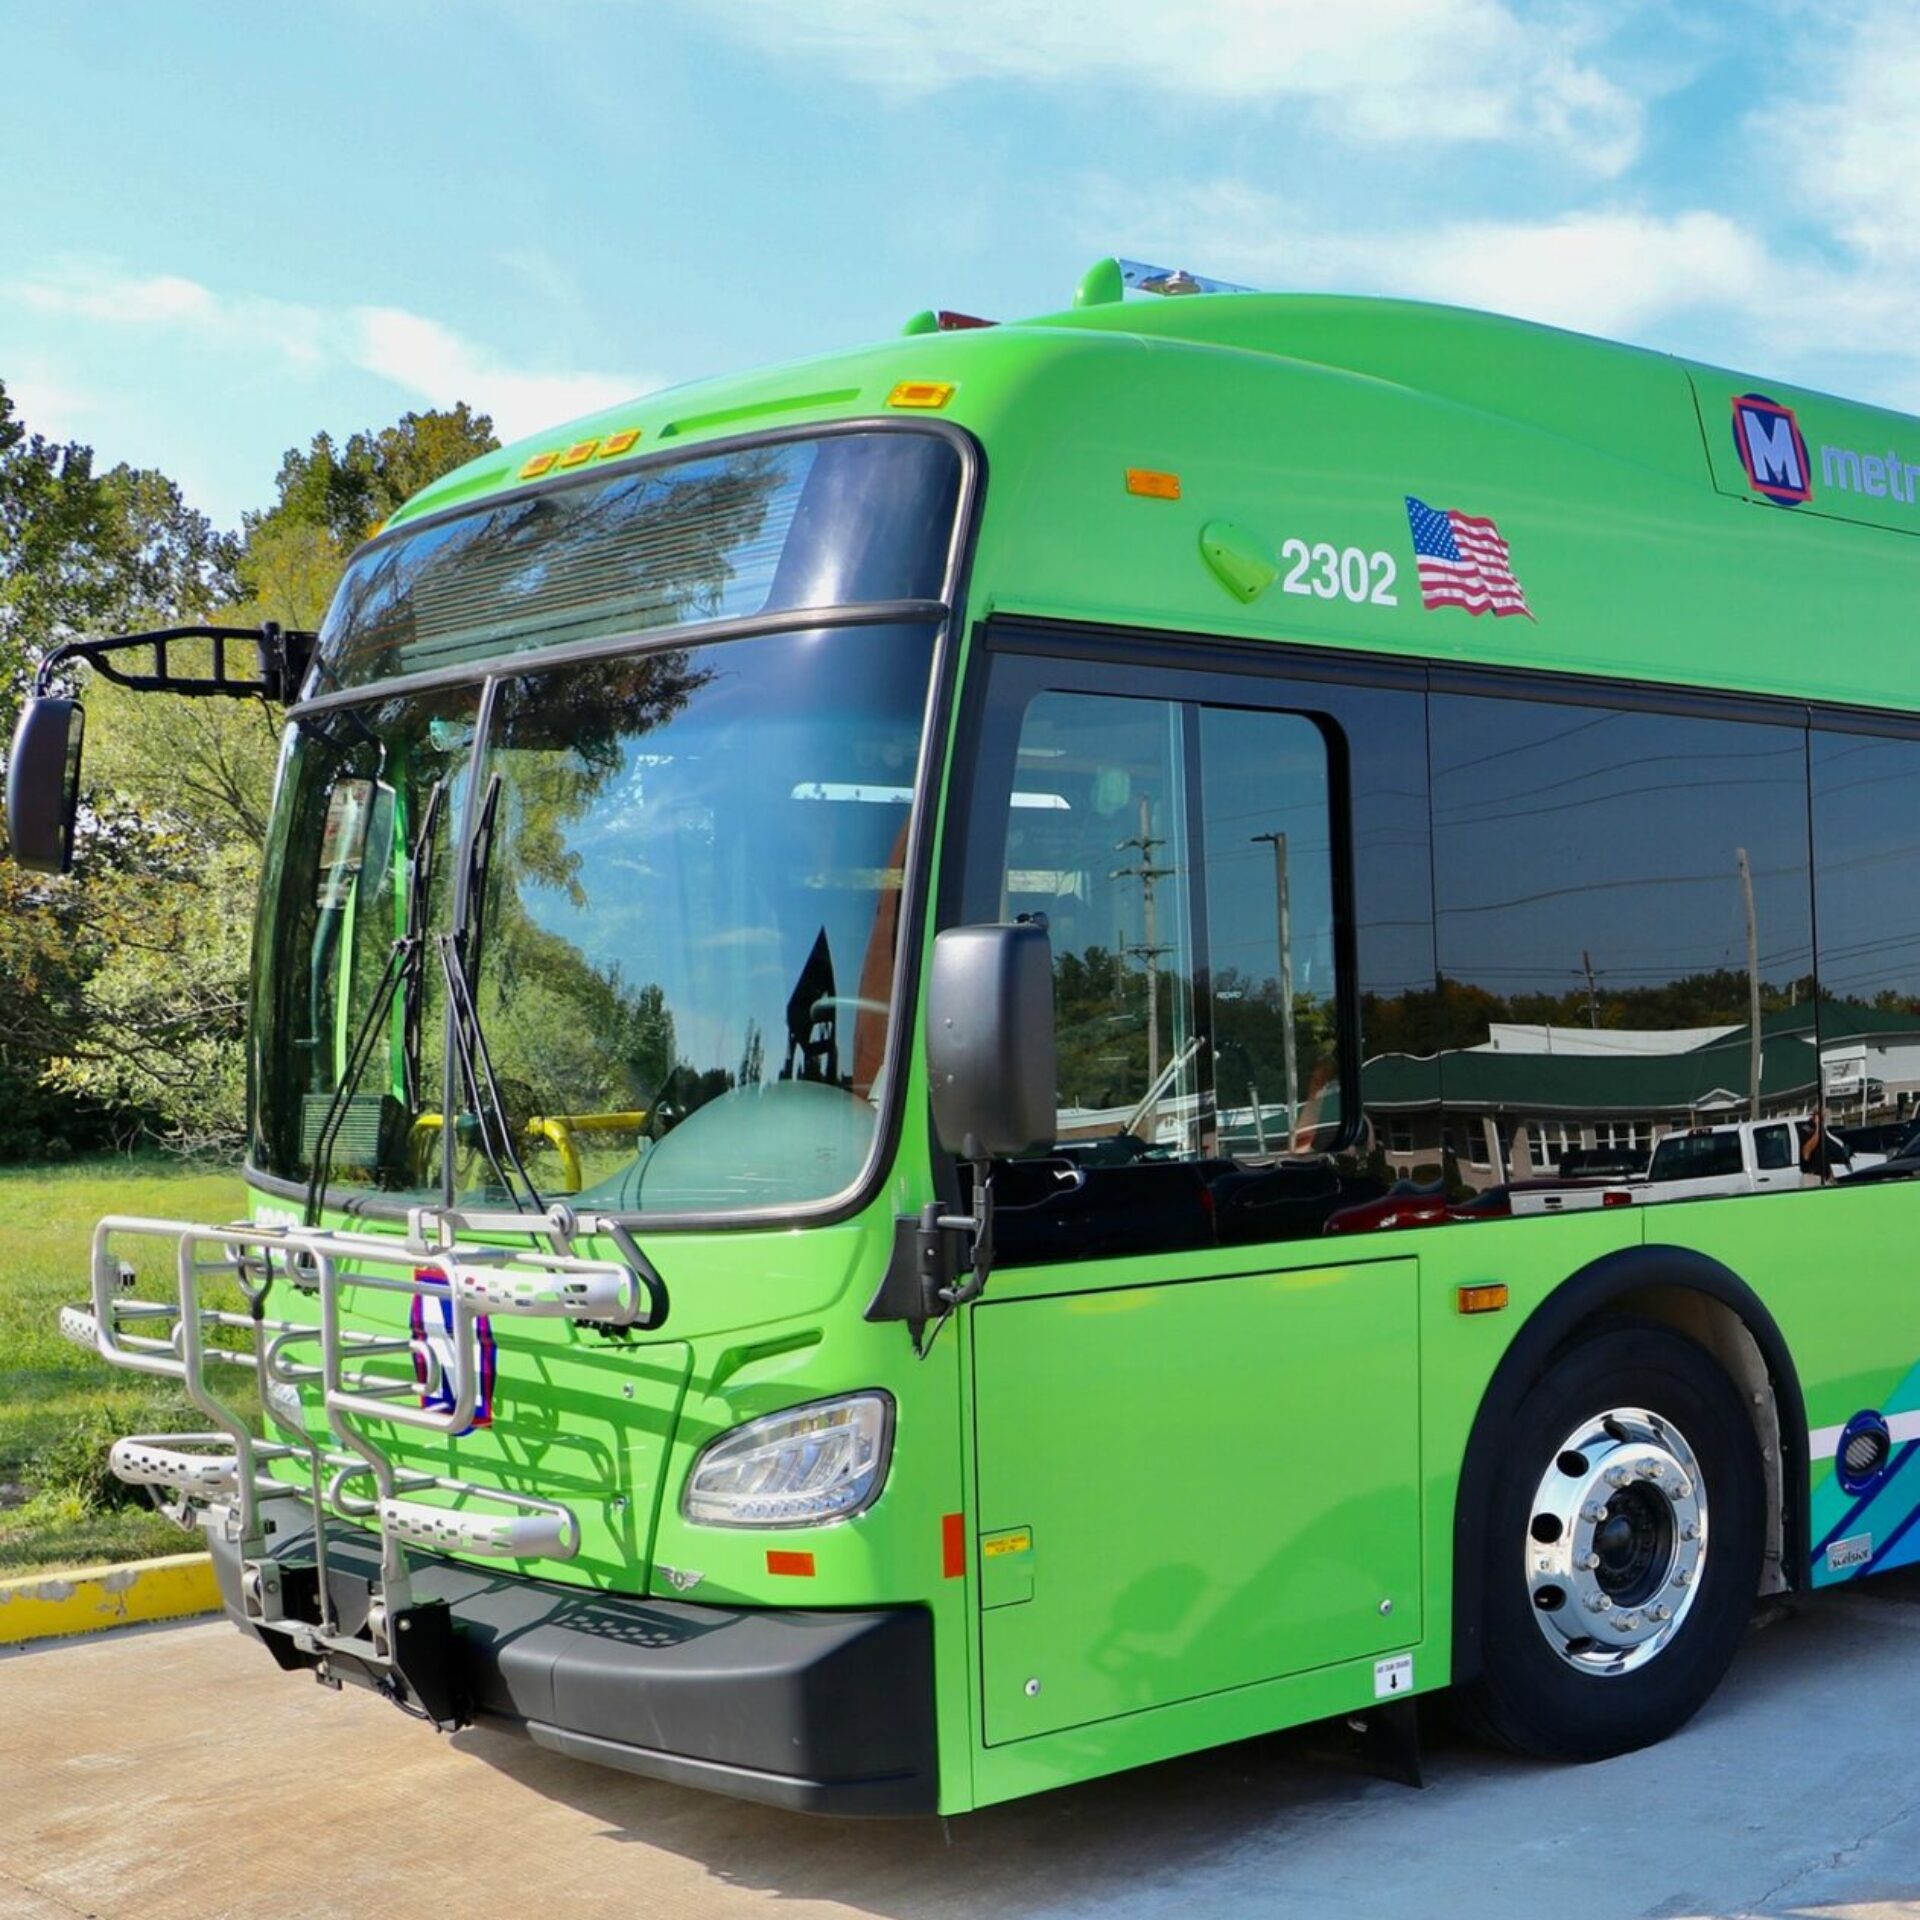 New Flyer zero-emission bus